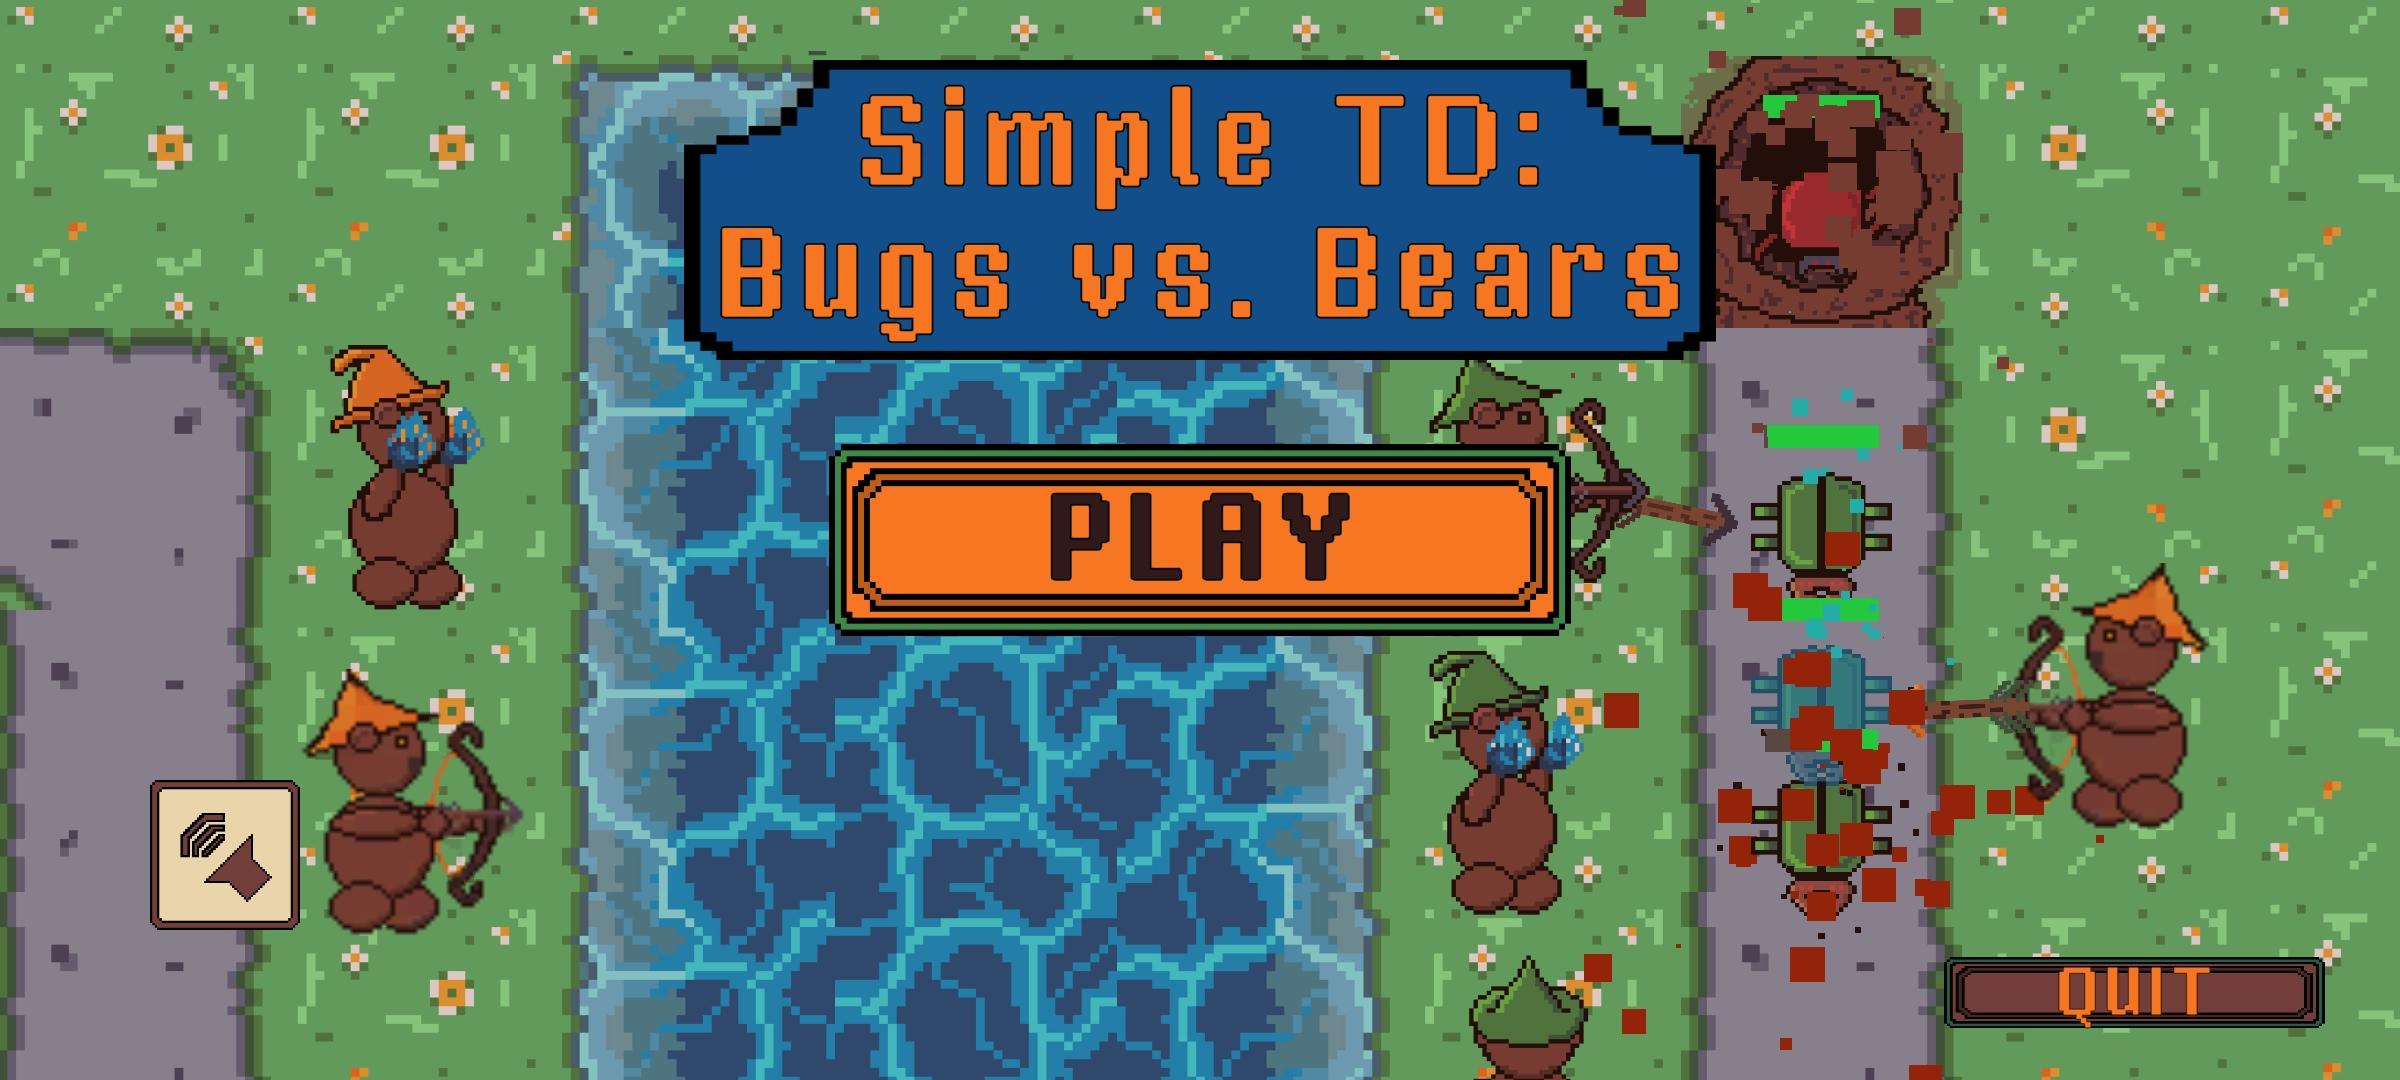 Screenshot 1 of TD Simples - Insetos vs. Ursos 2.5